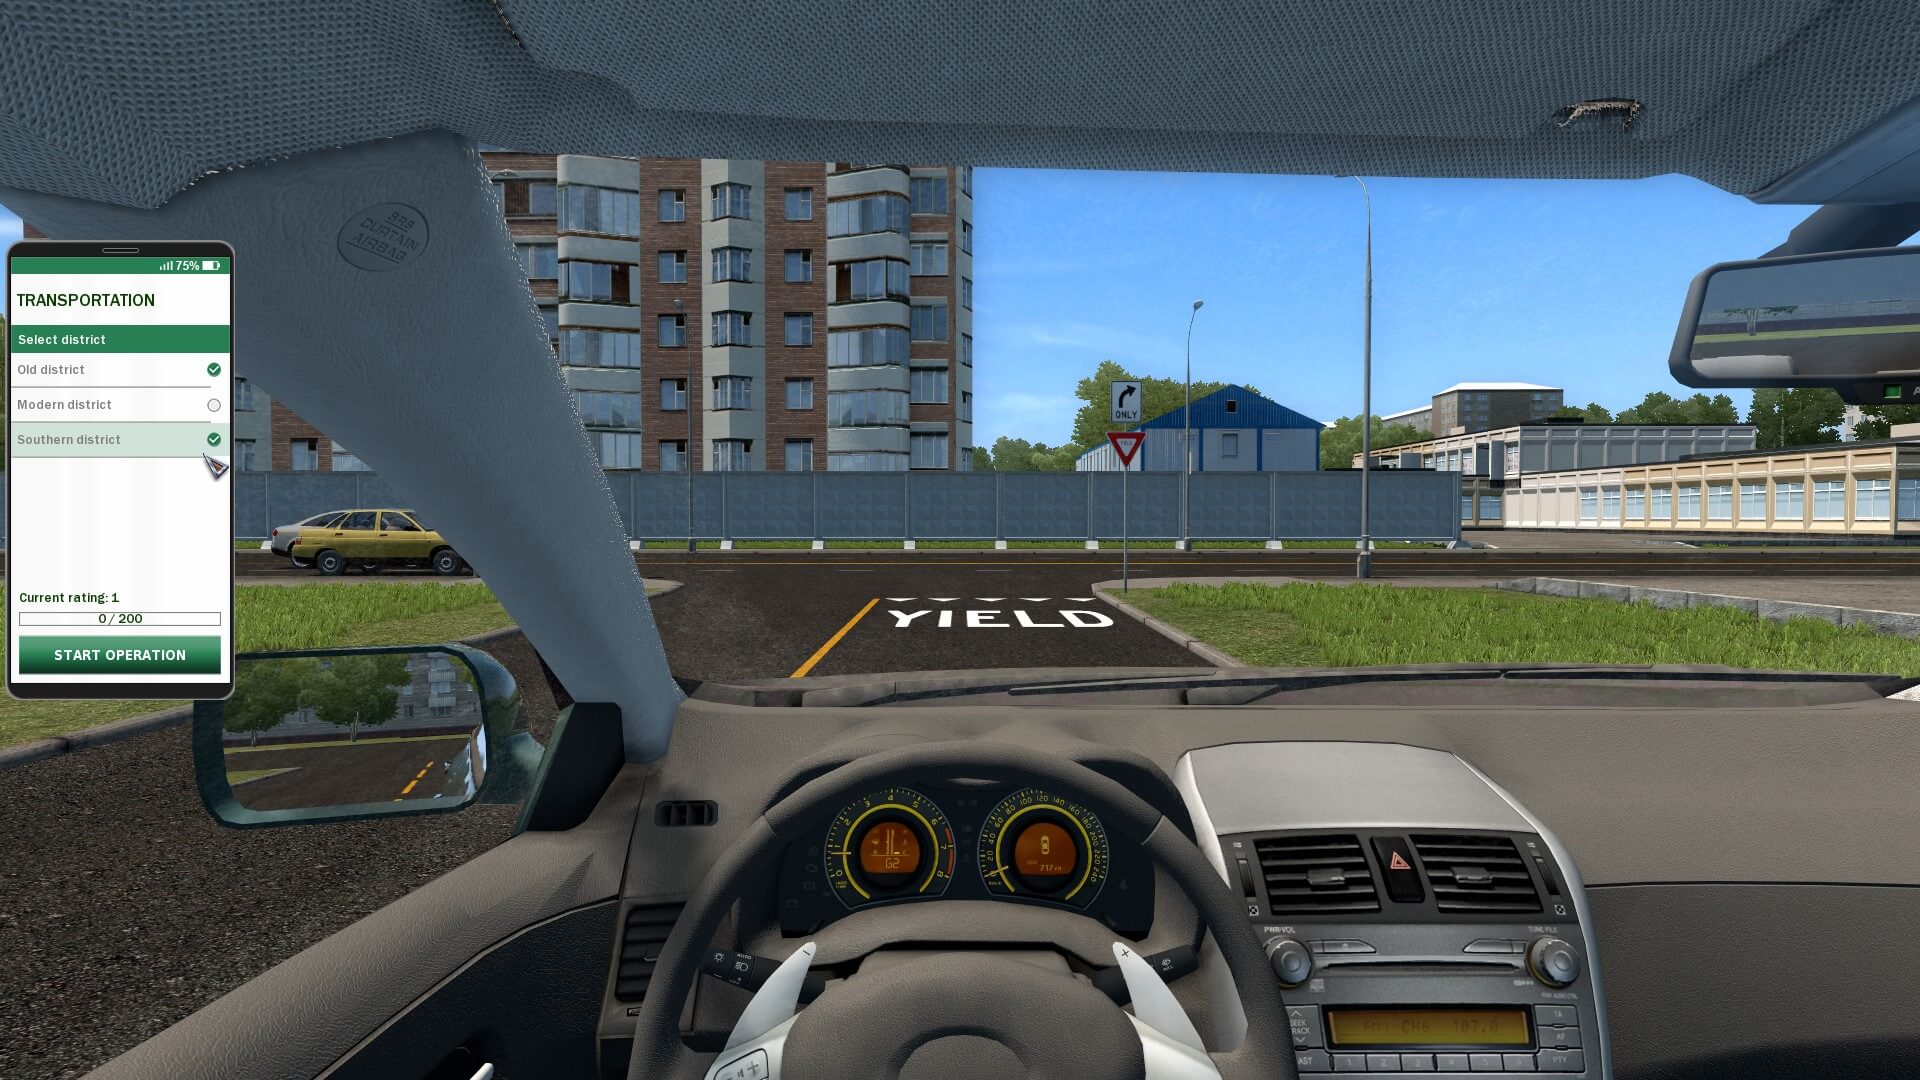 Ucds car driving simulator. City car Driving v1.5.9.2. City car Driving диск. City car Driving 2020 ПК. City car Driving 1.2.1.